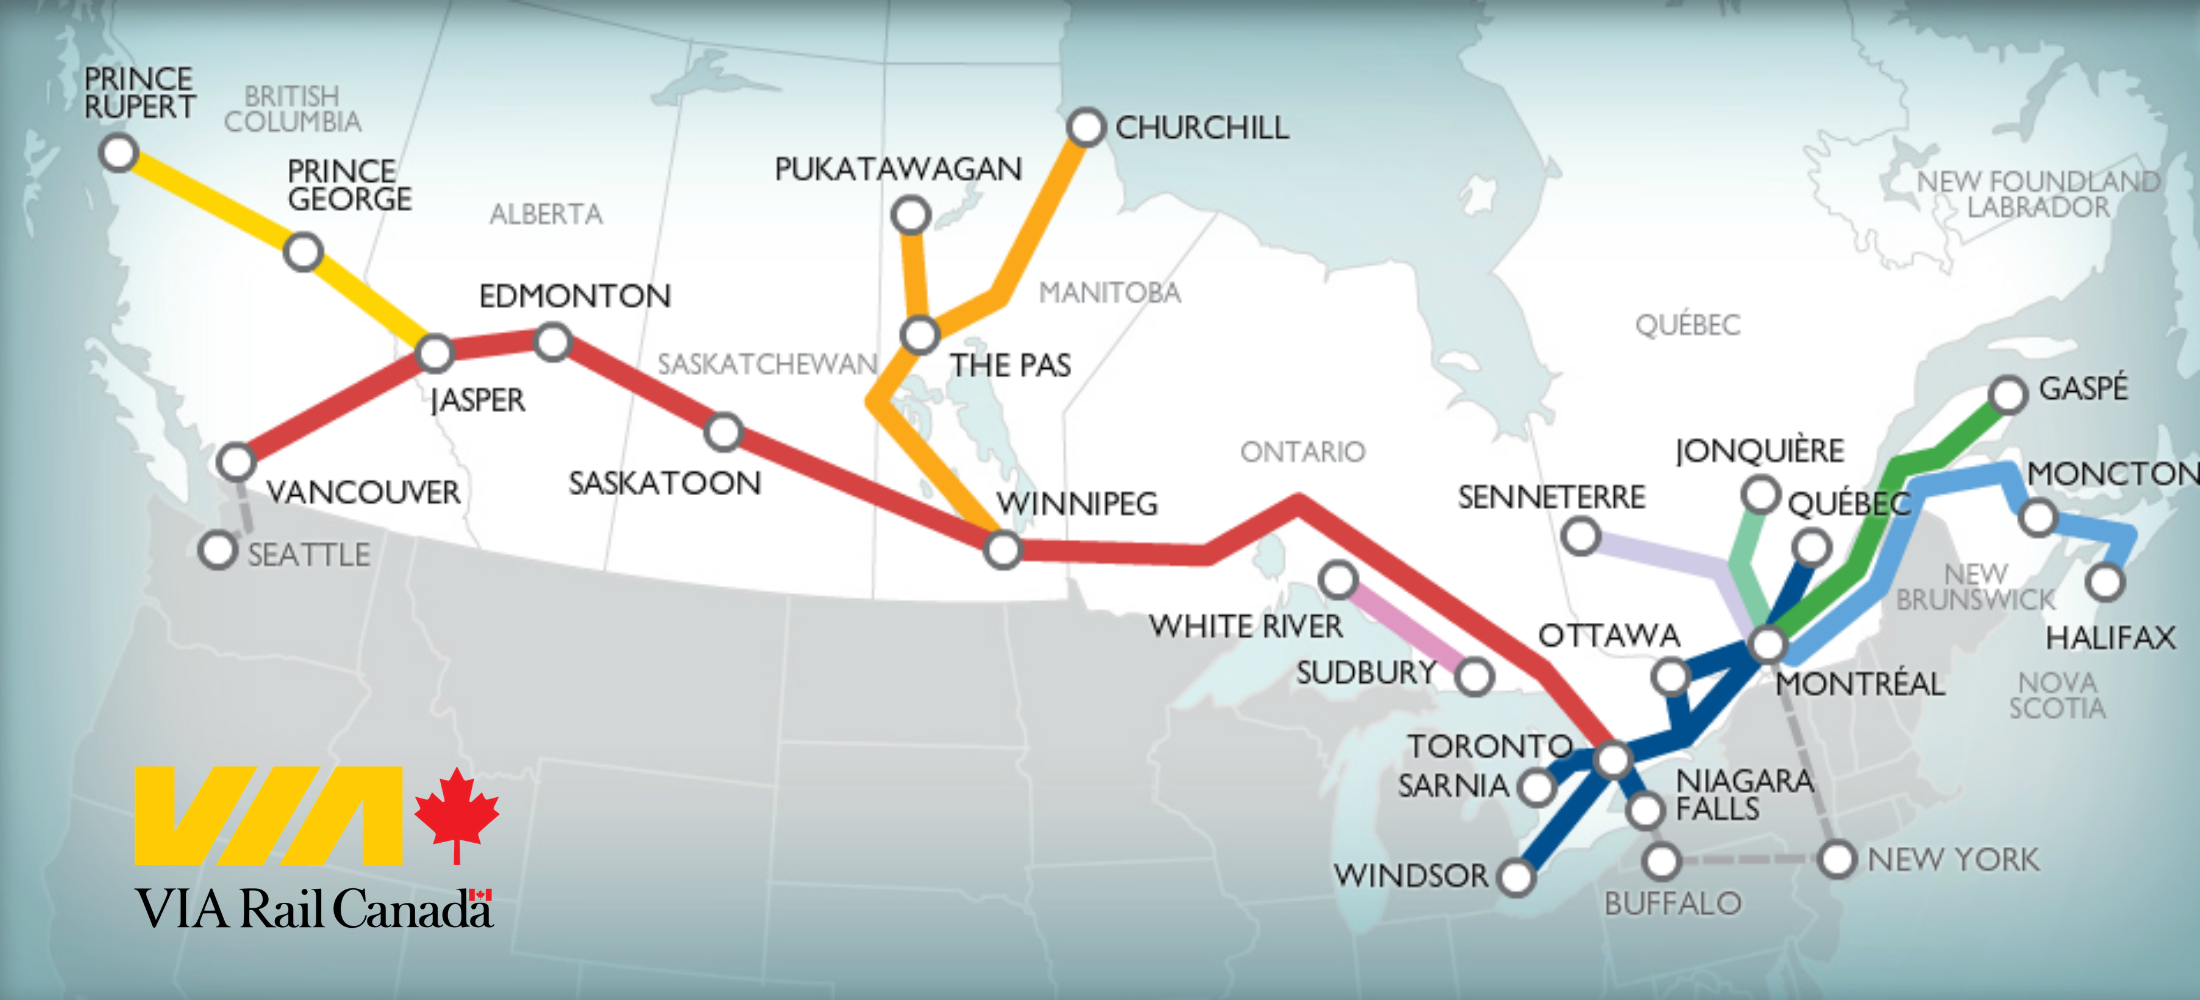 canada-train-holiday-via-rail